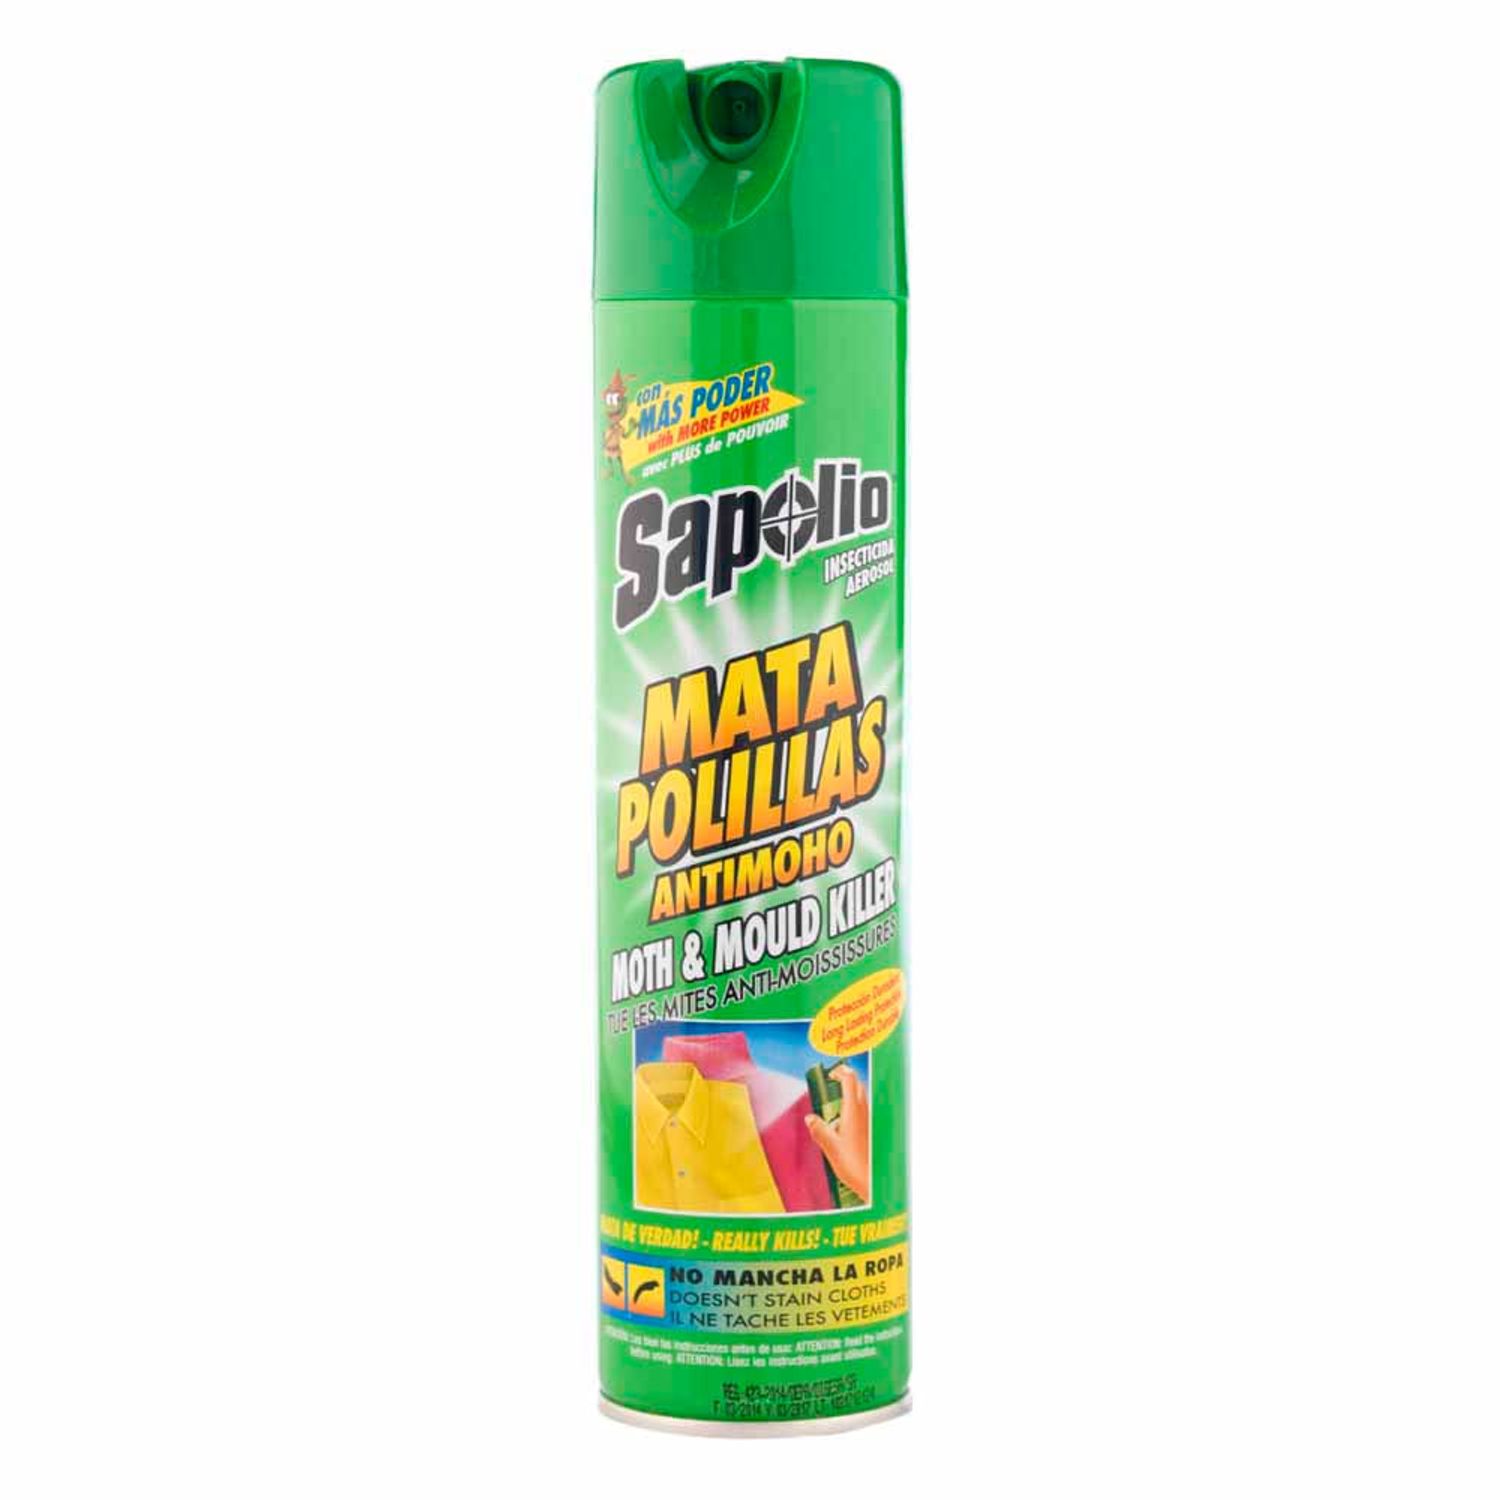 Comprar online Spray antimoho Paso.